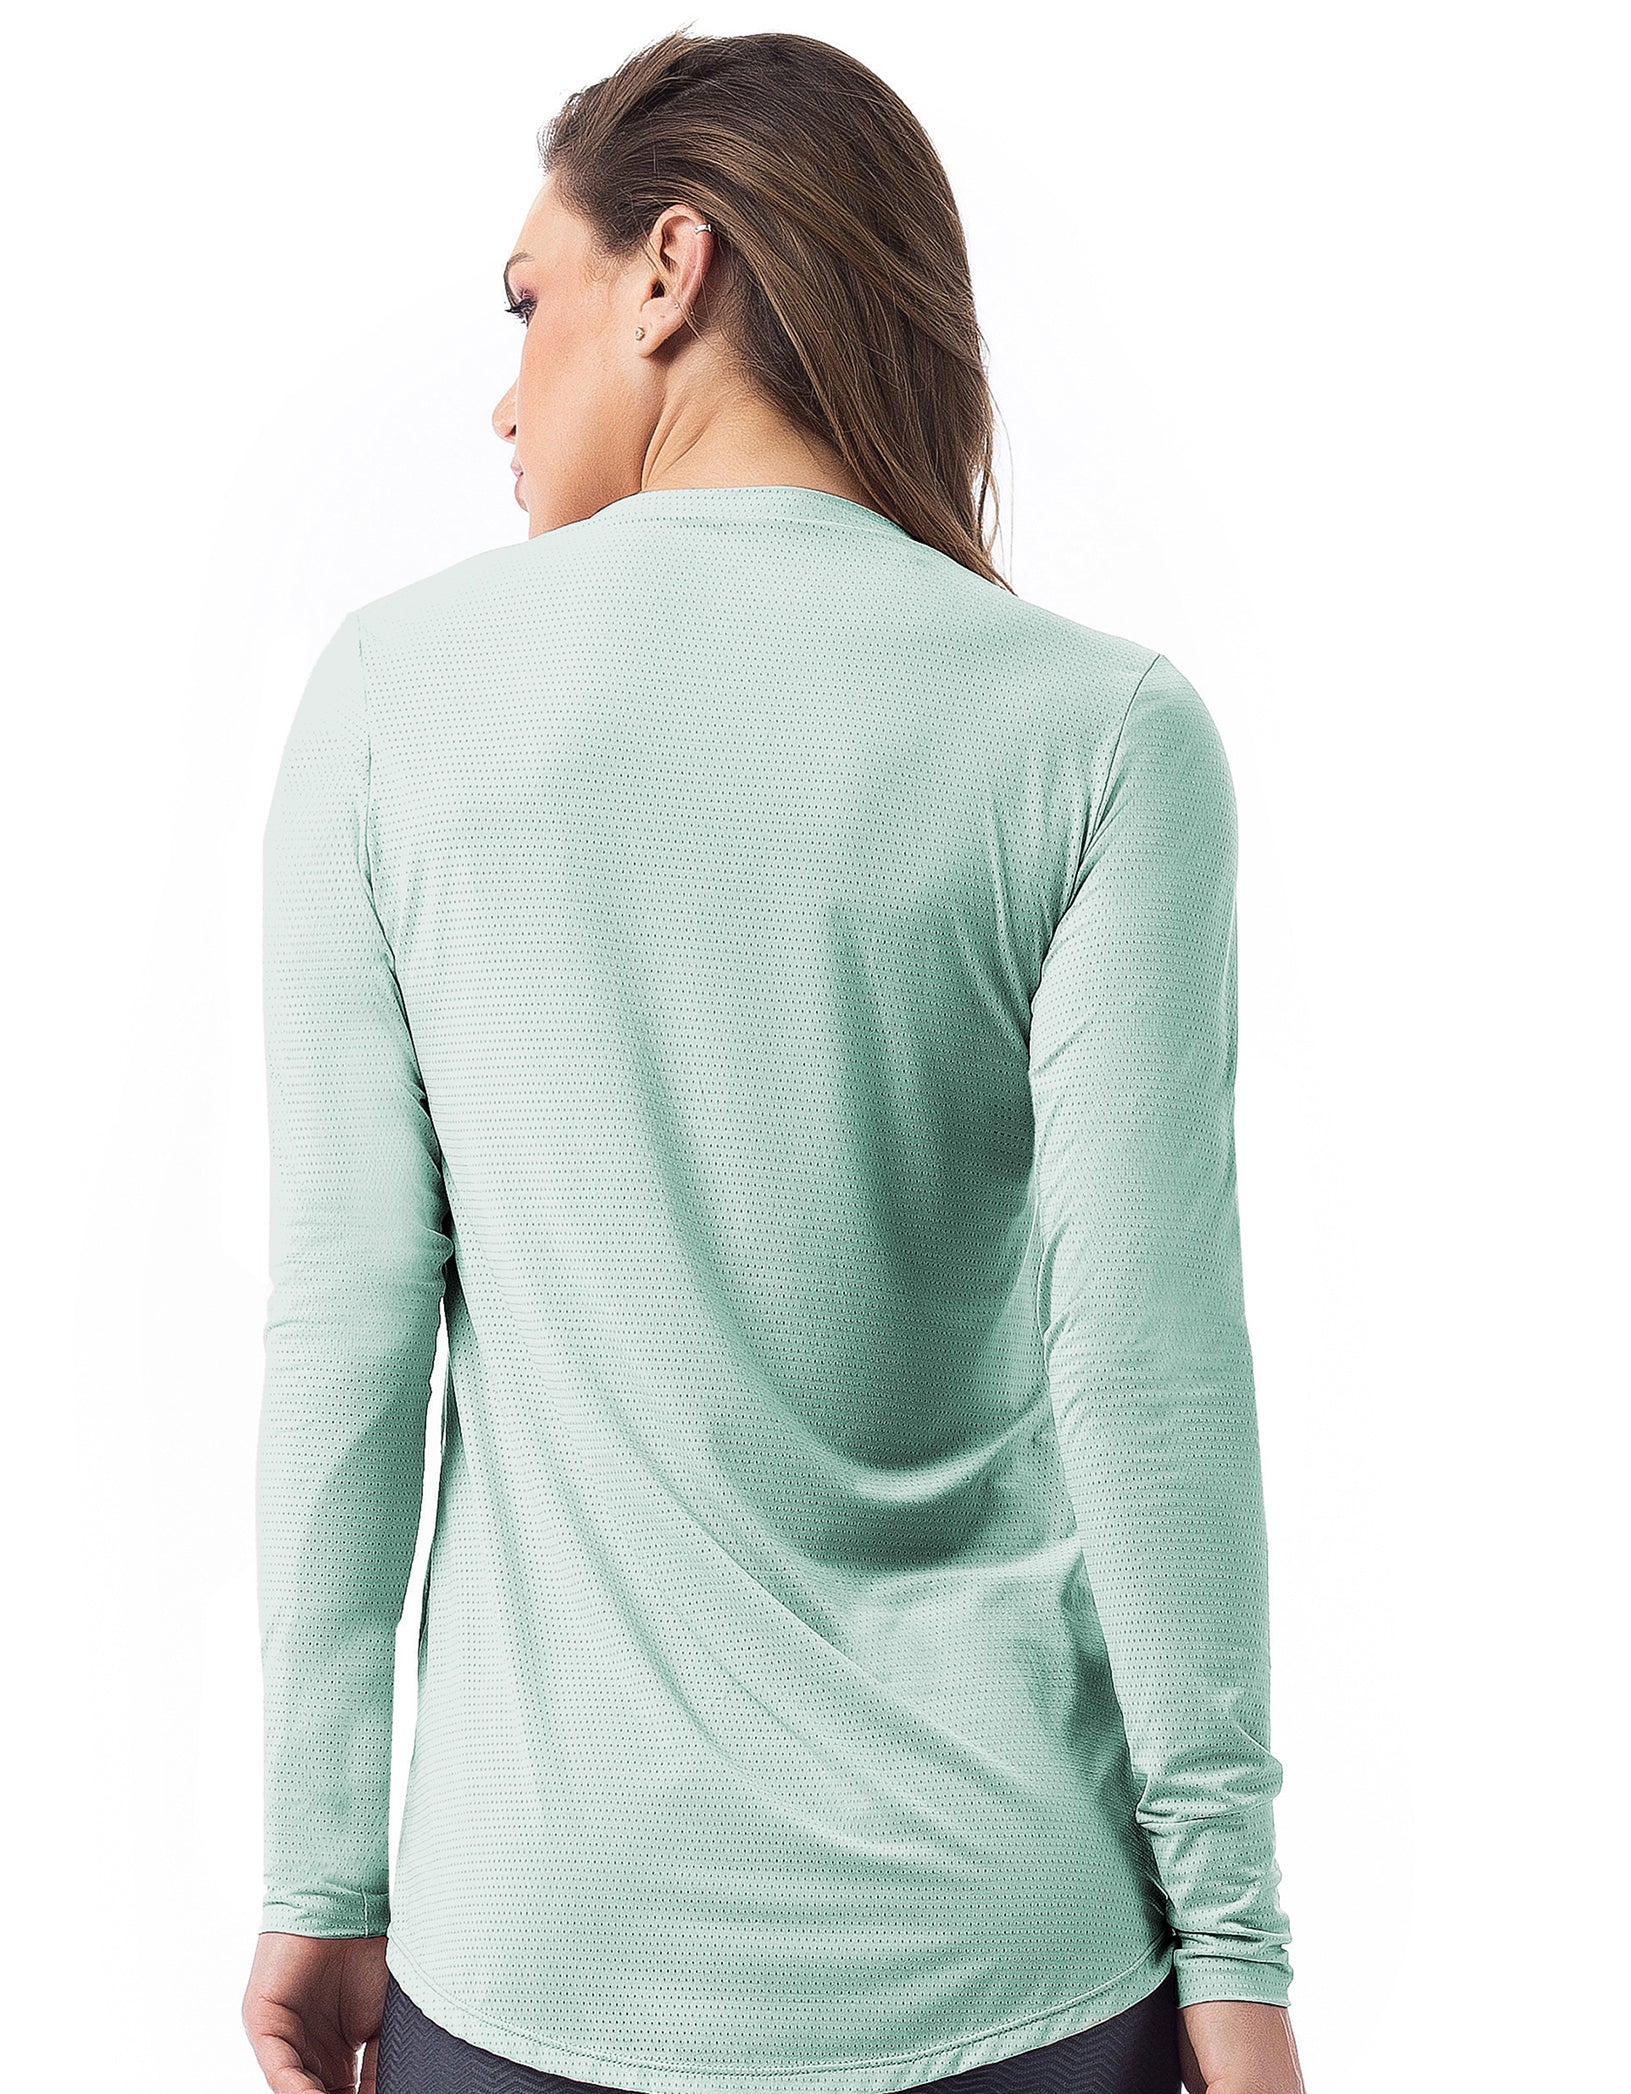 Vestem - Shirt Dry Fit Long Sleeve Janice Verde Etero - BML16C0291